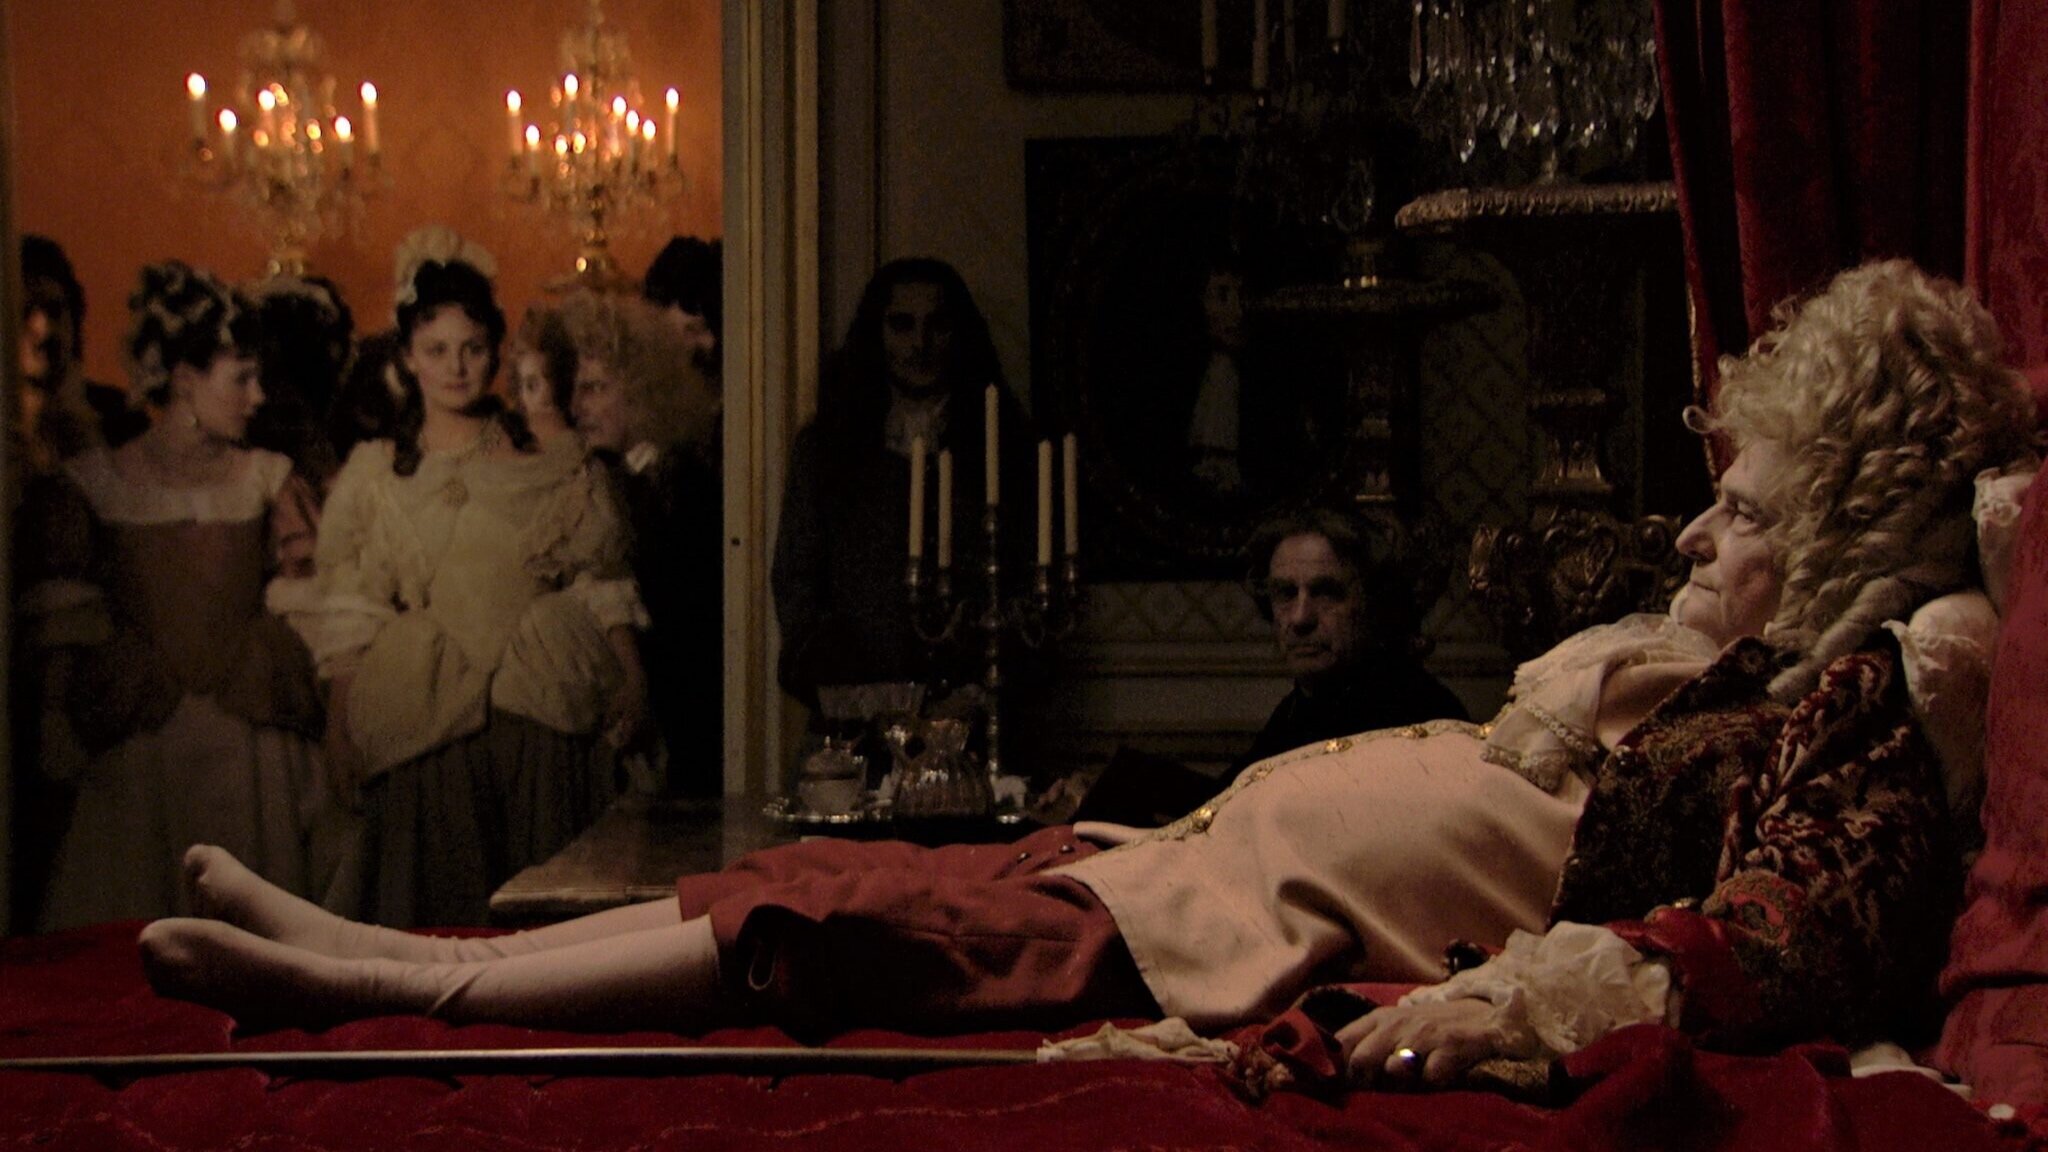 The Death of Louis XIV - Film Comment